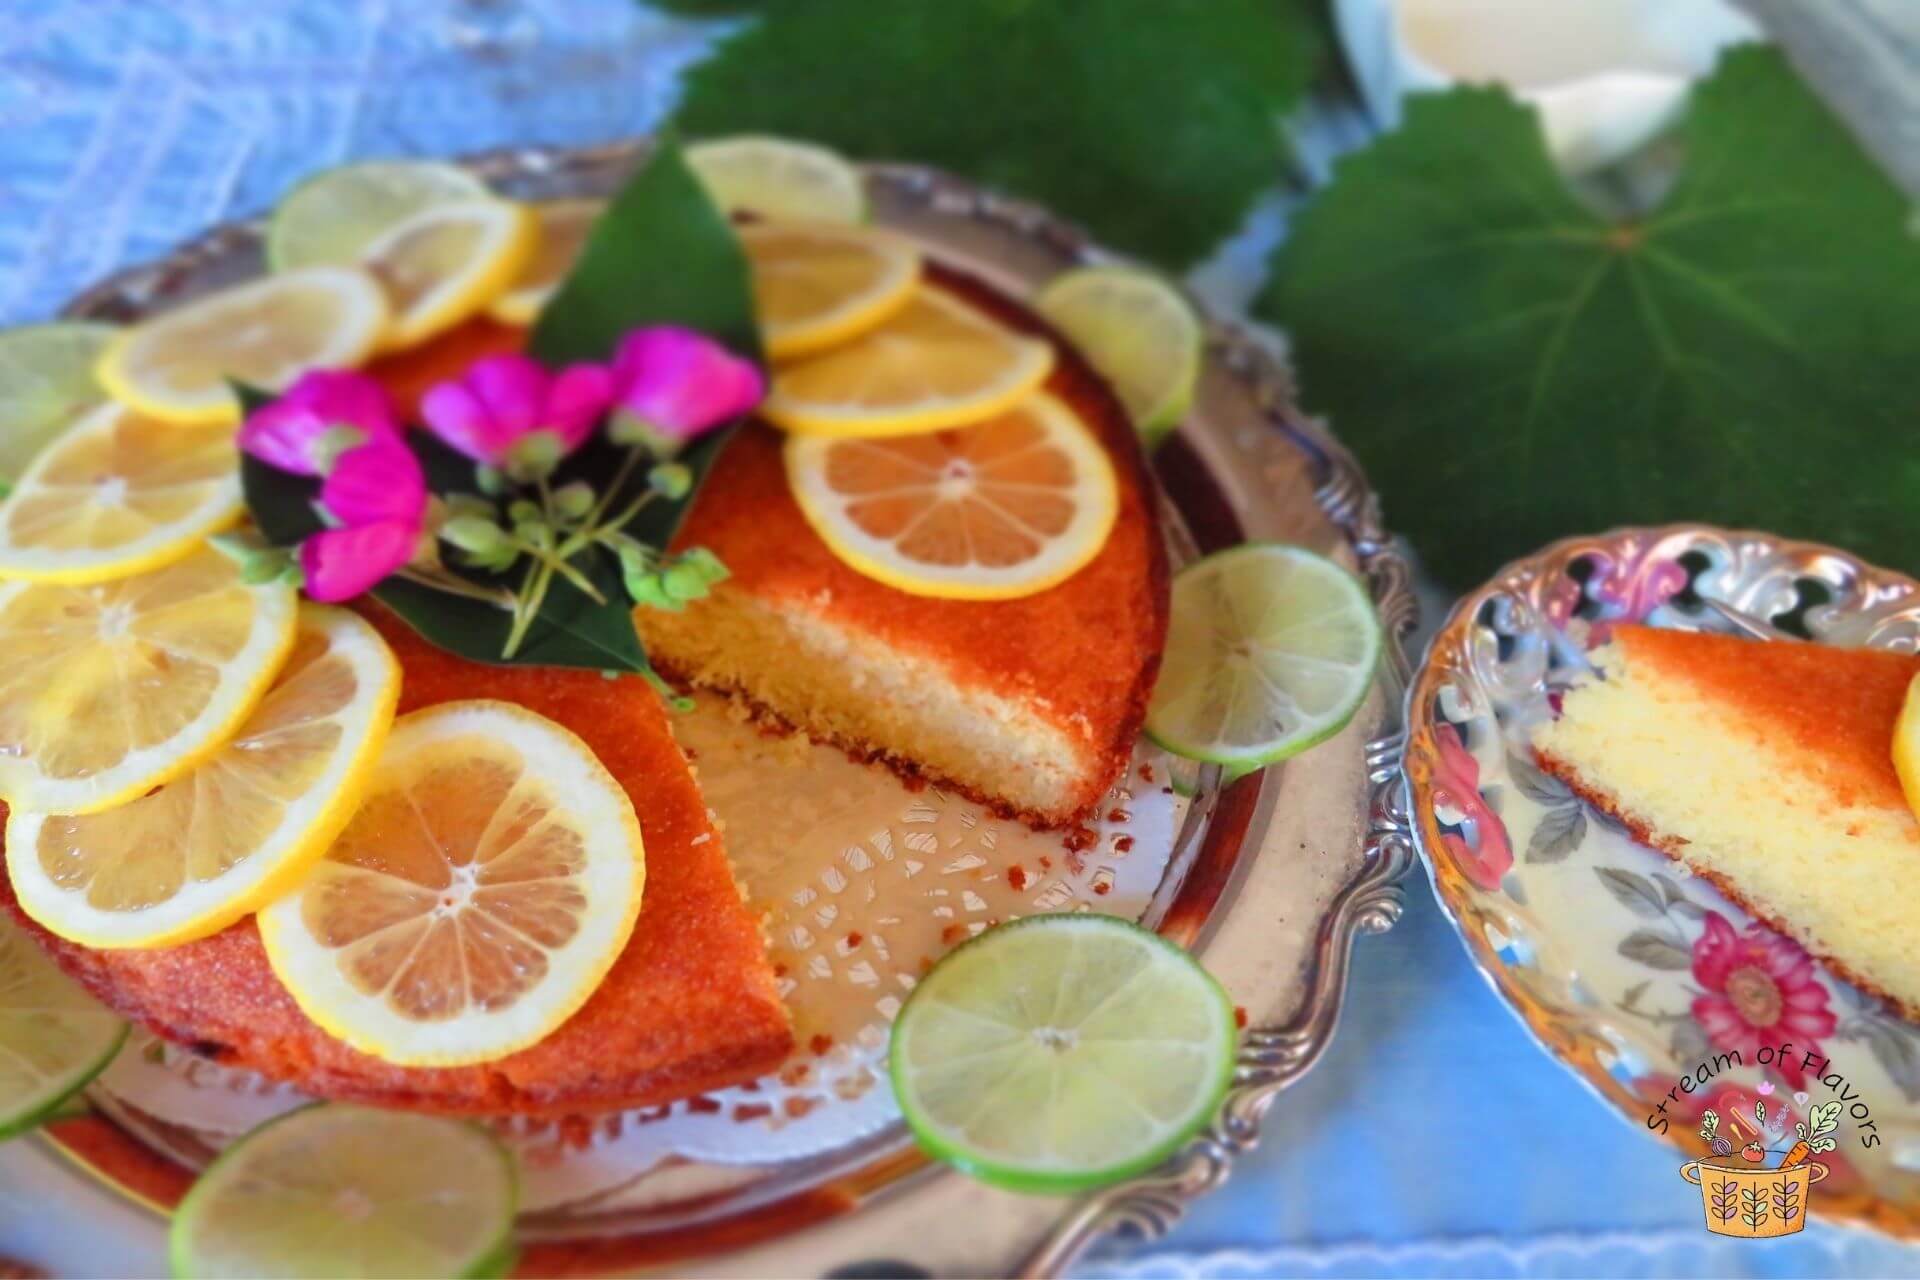 Greek semolina cake with lemon slices